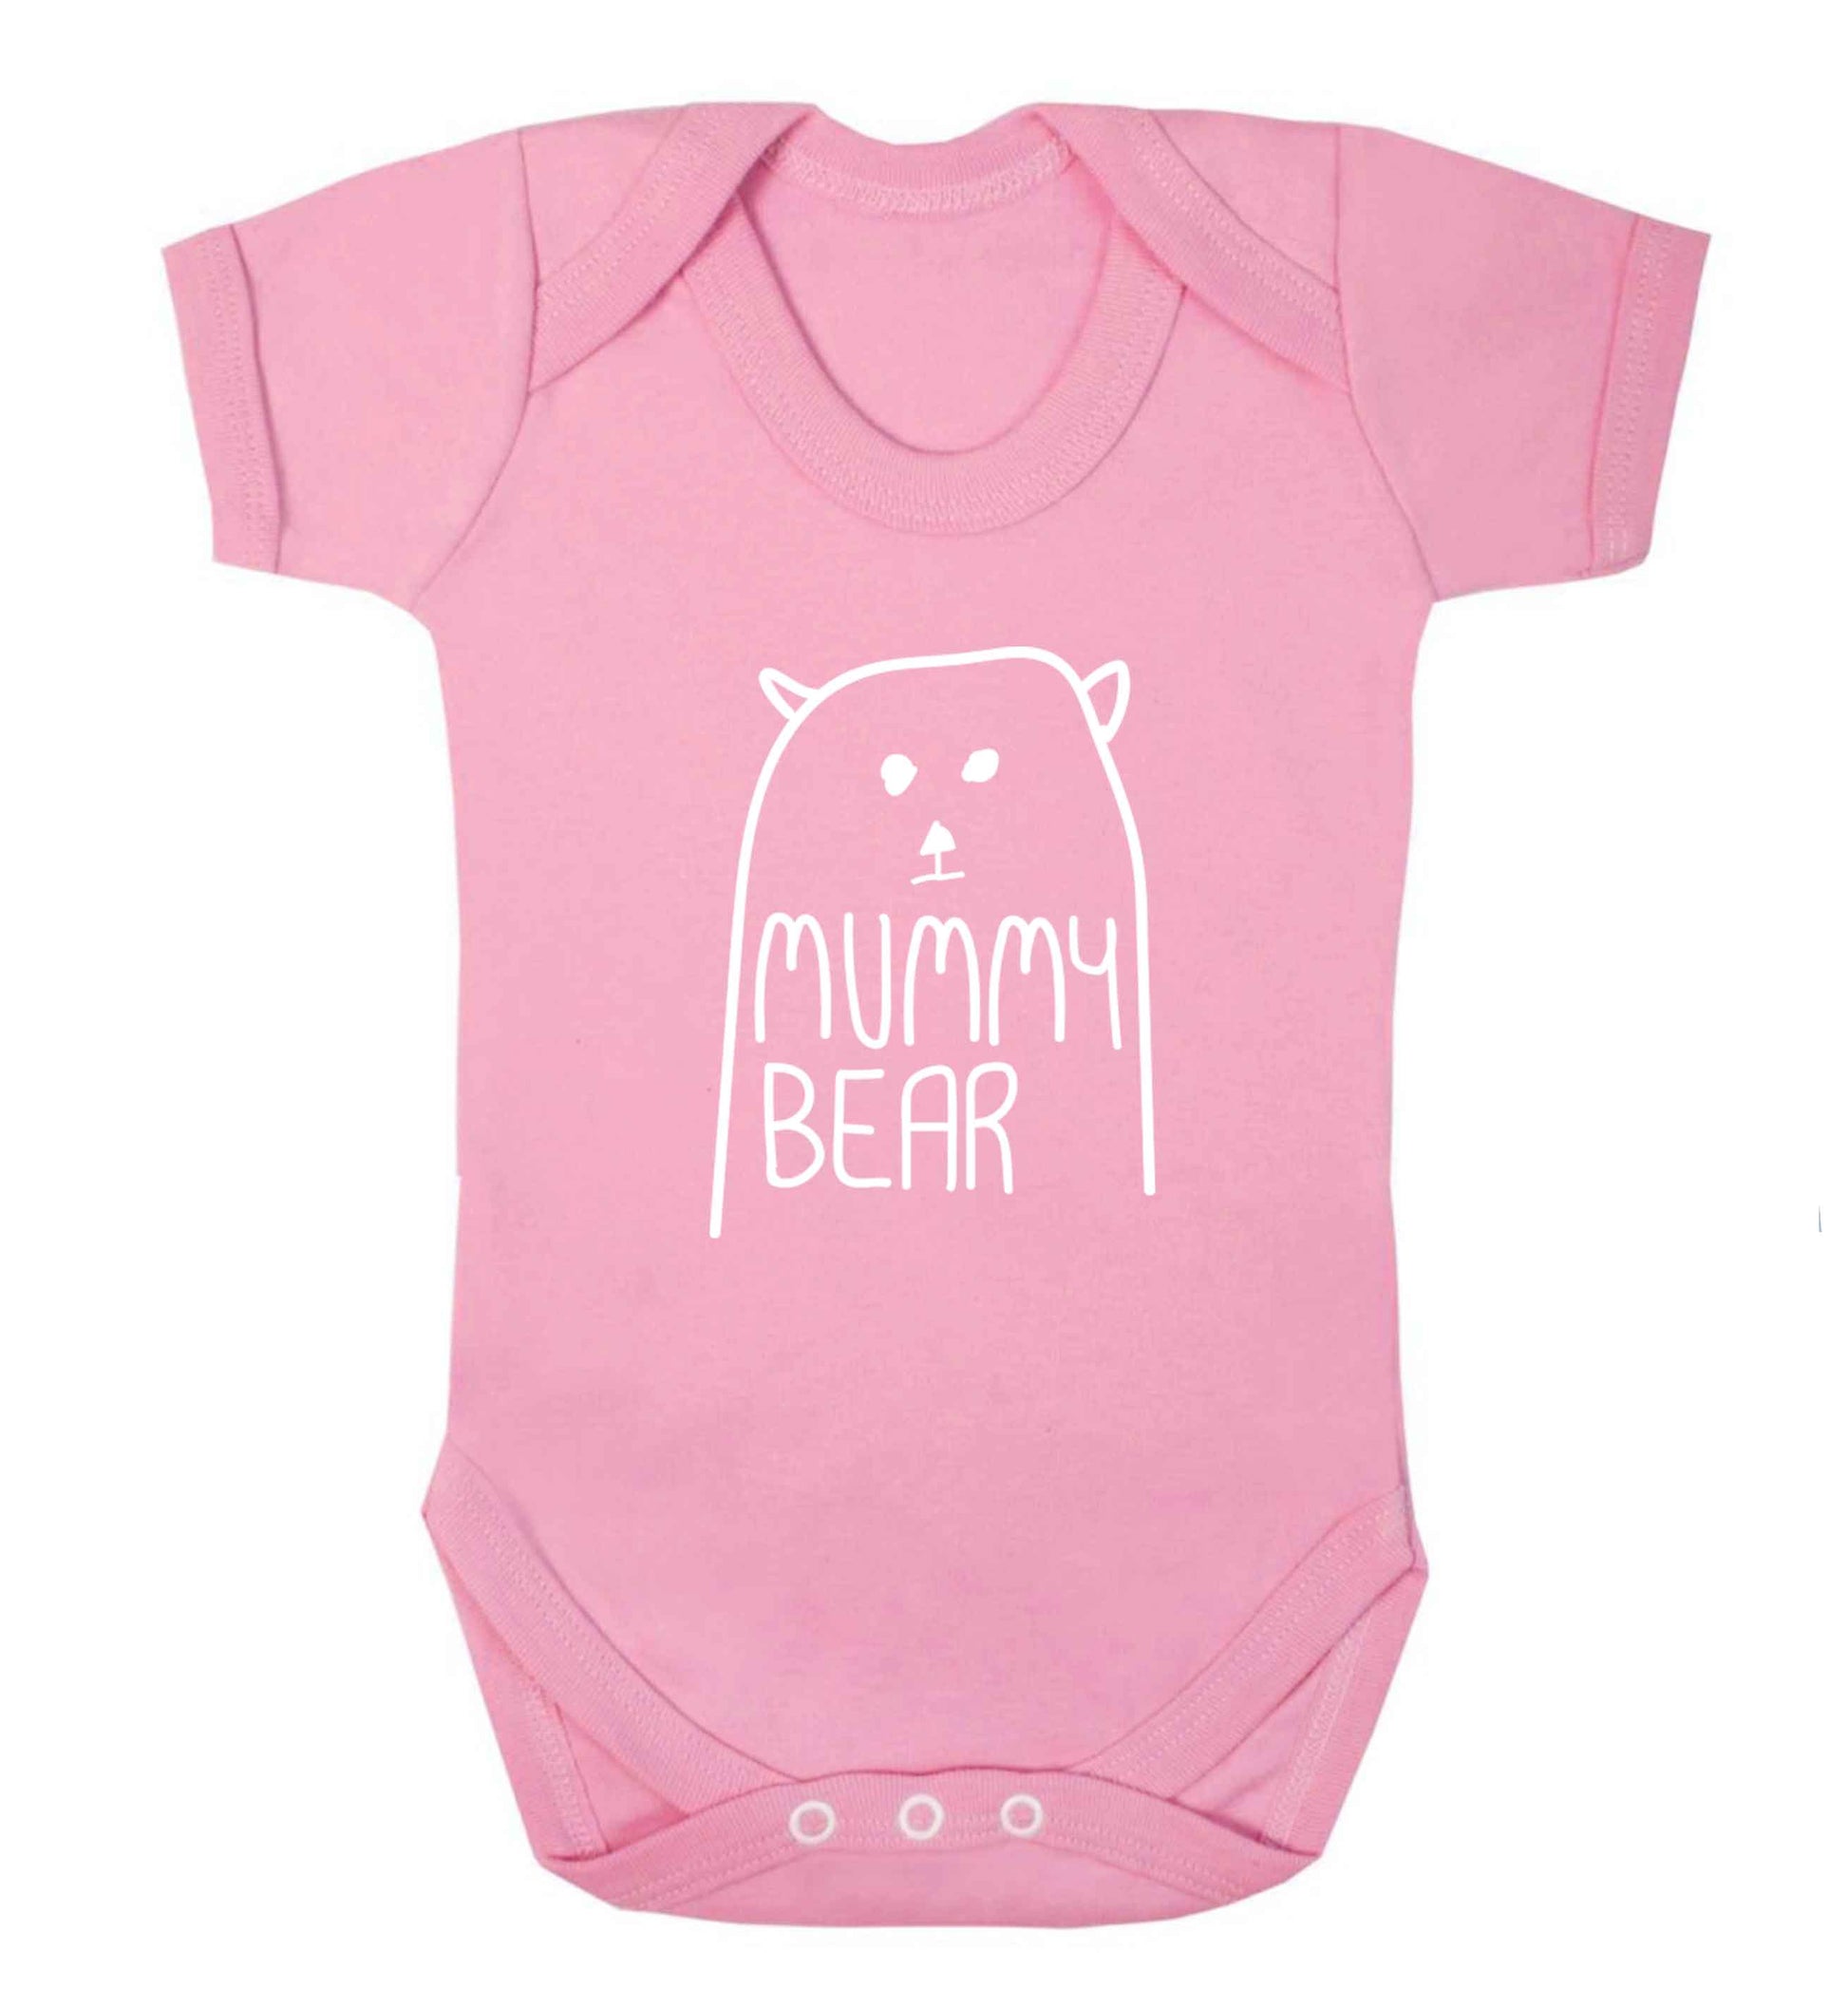 Mummy bear baby vest pale pink 18-24 months